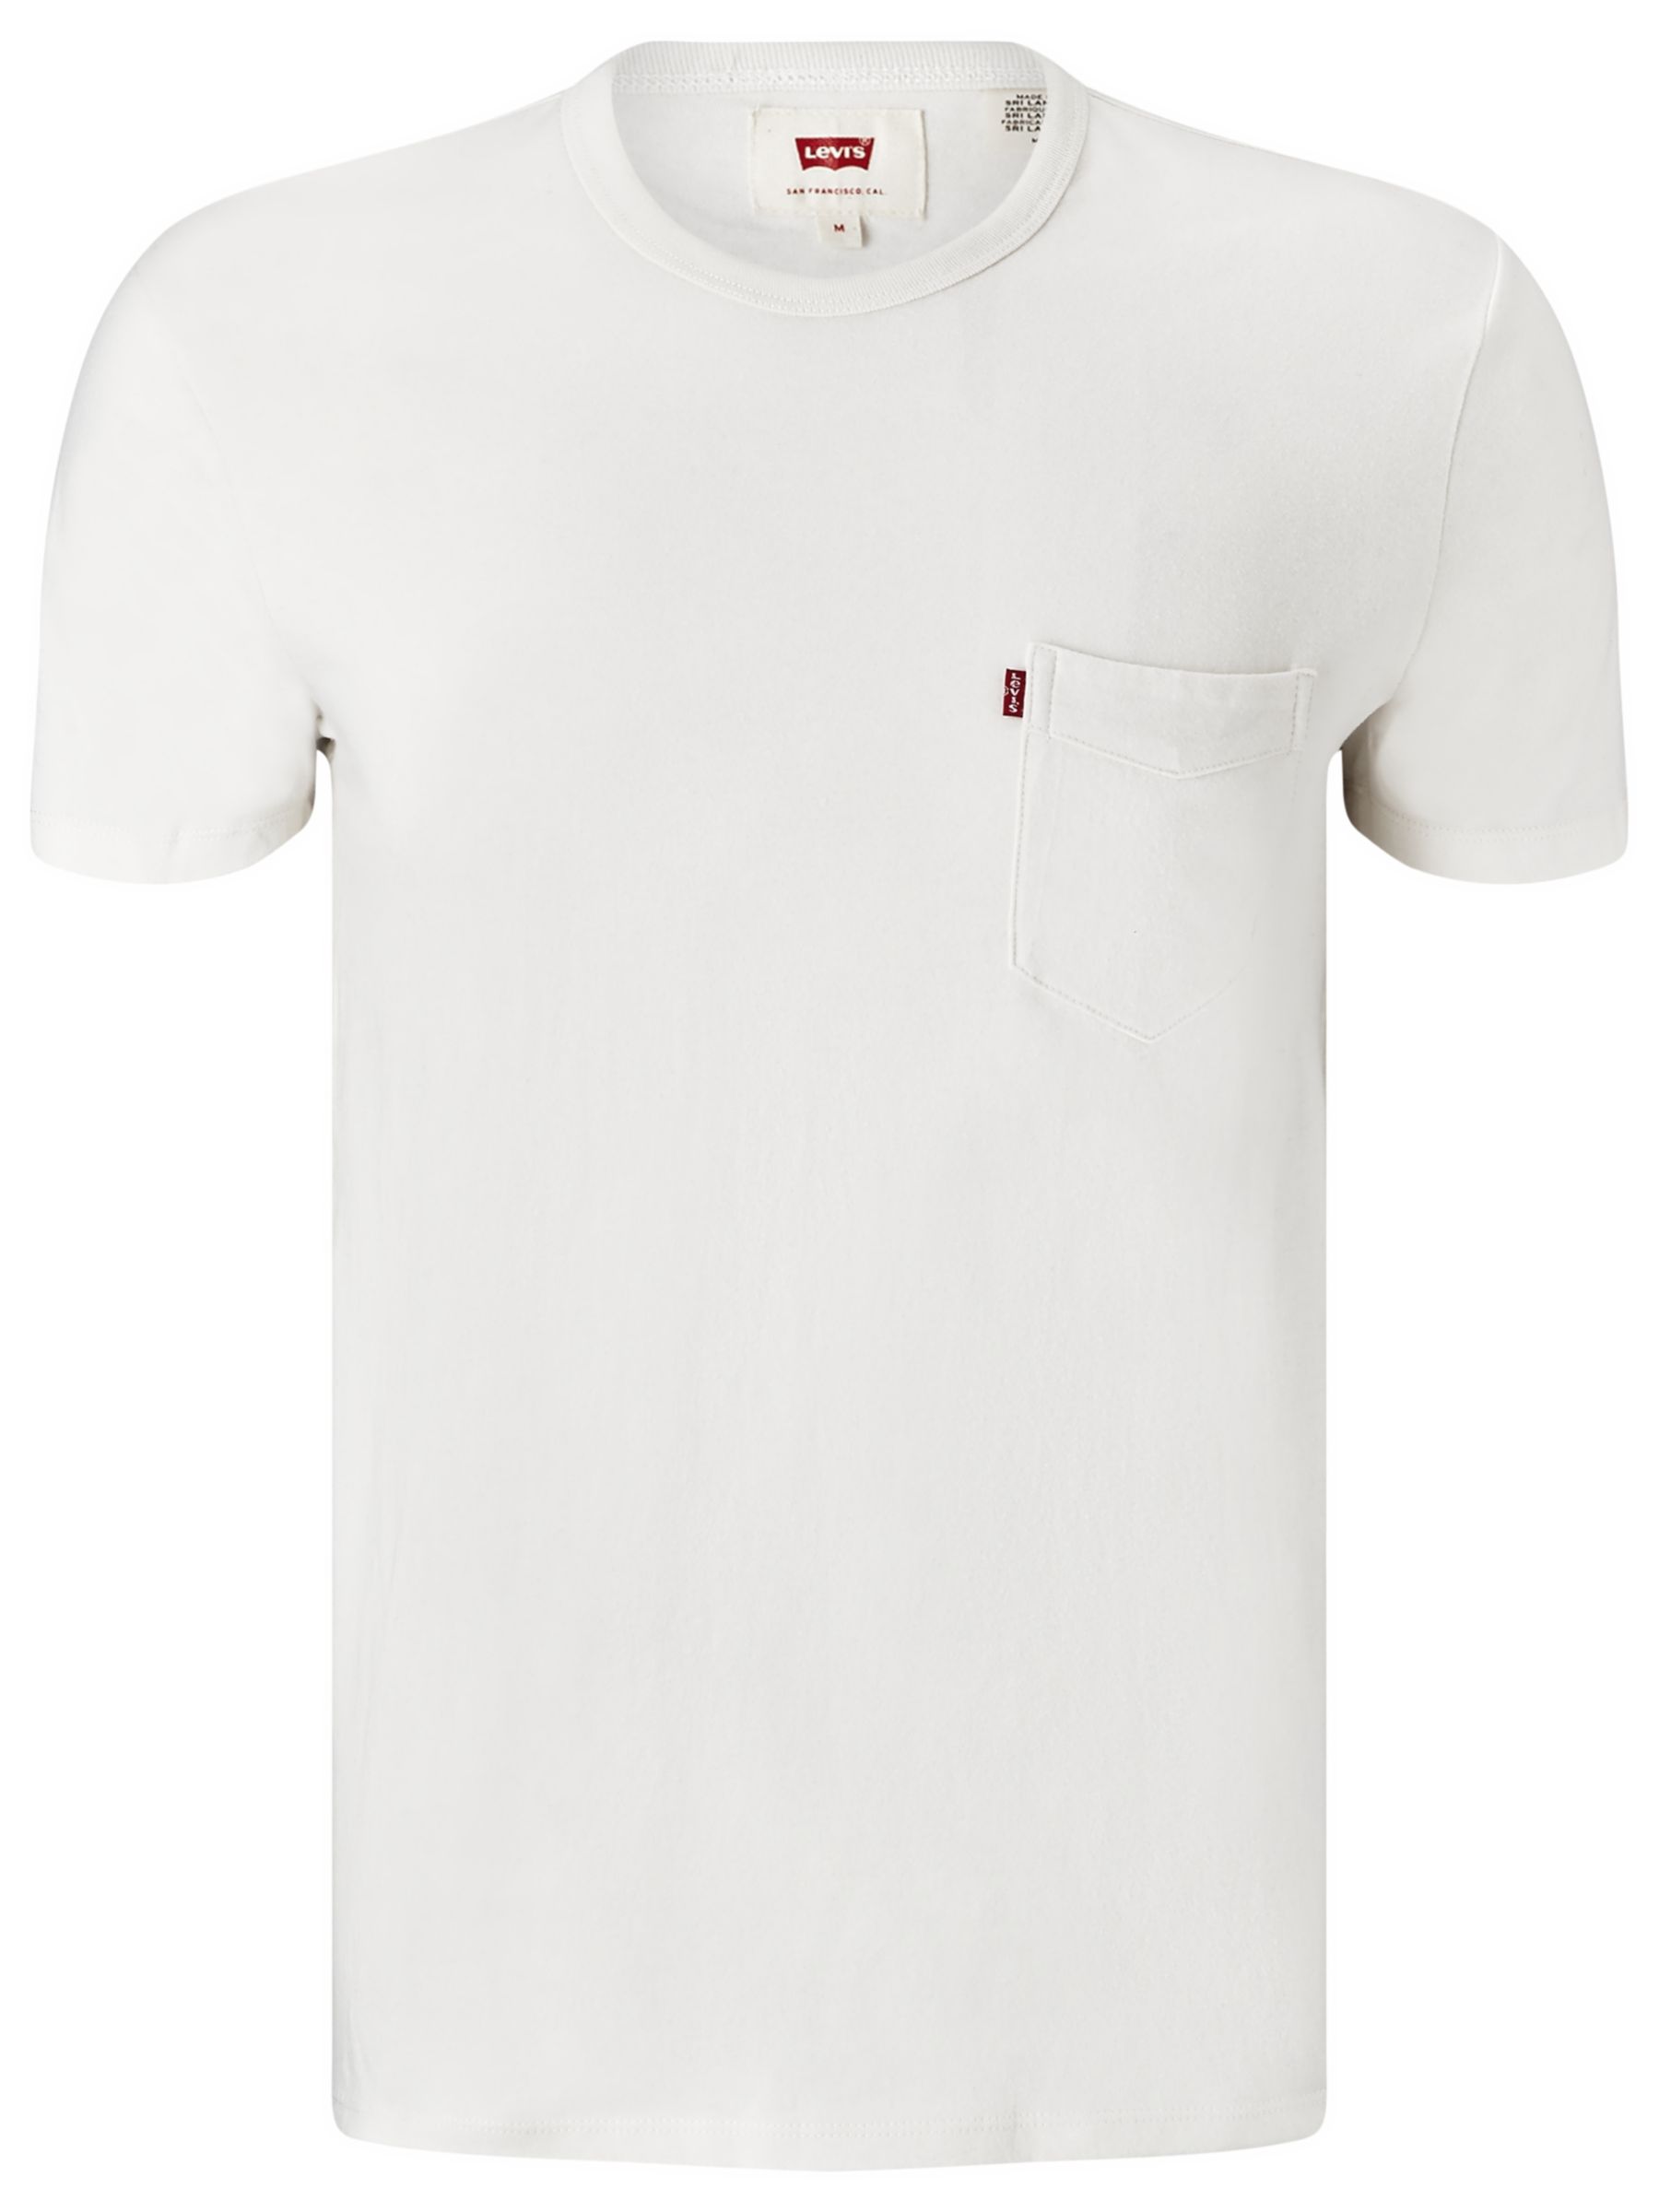 levis plain white shirt